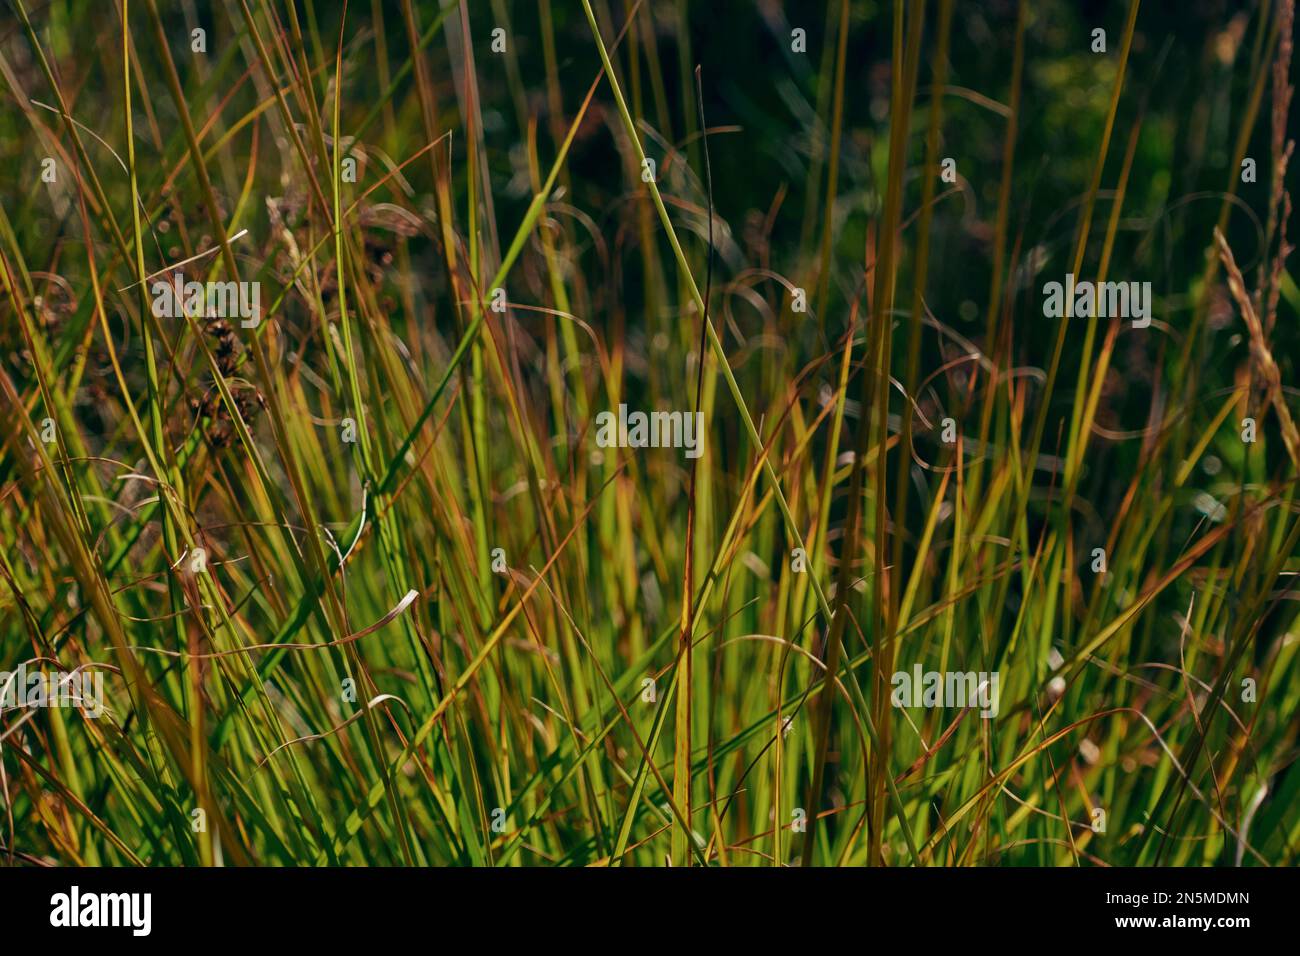 Stems of rush grass, Scotland. Stock Photo